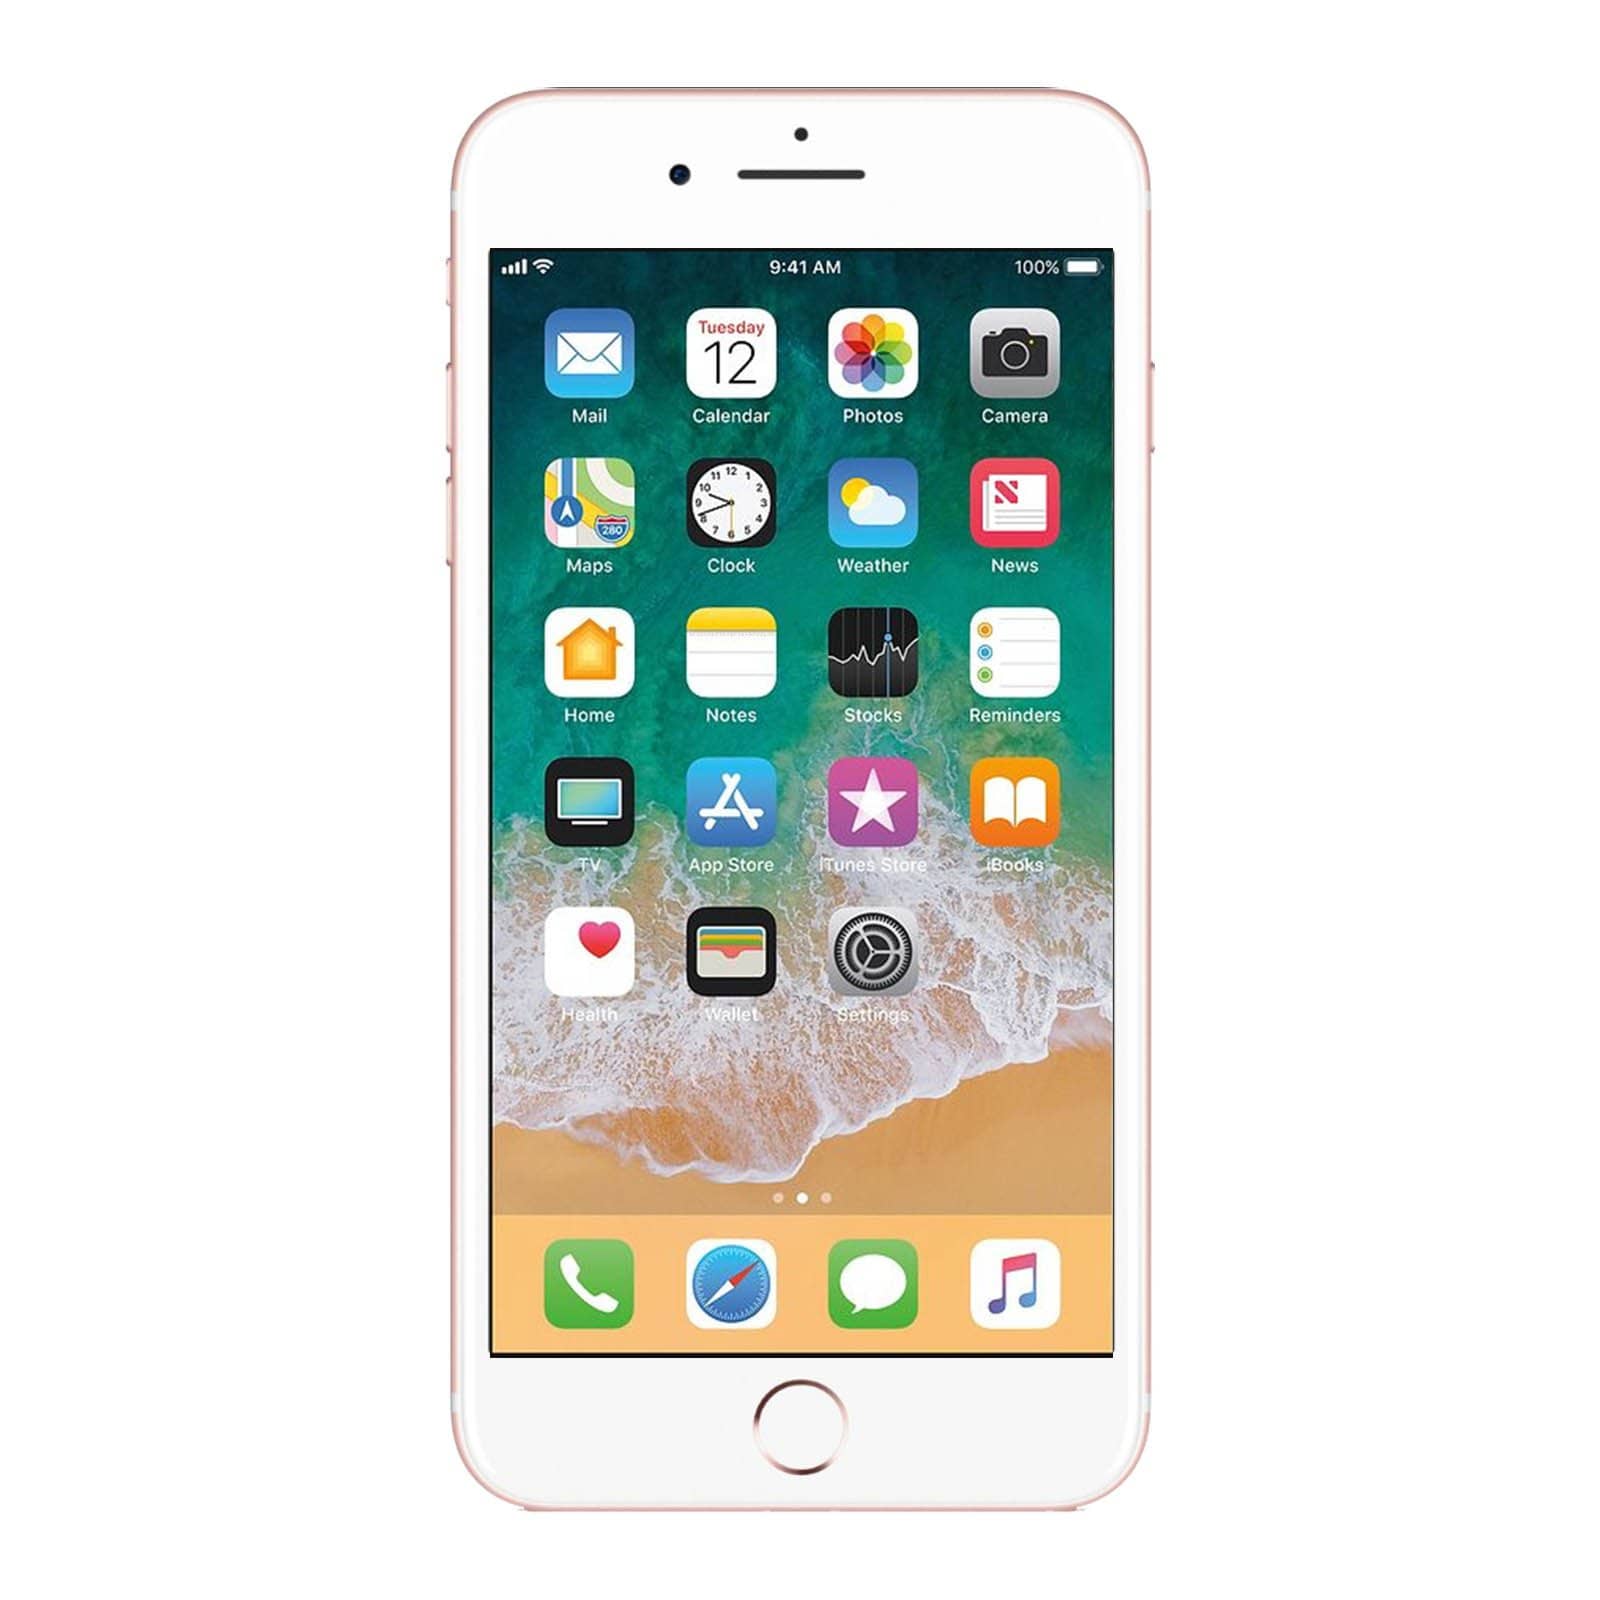 Apple iPhone 7 Plus 256GB Rose Gold Good - Unlocked